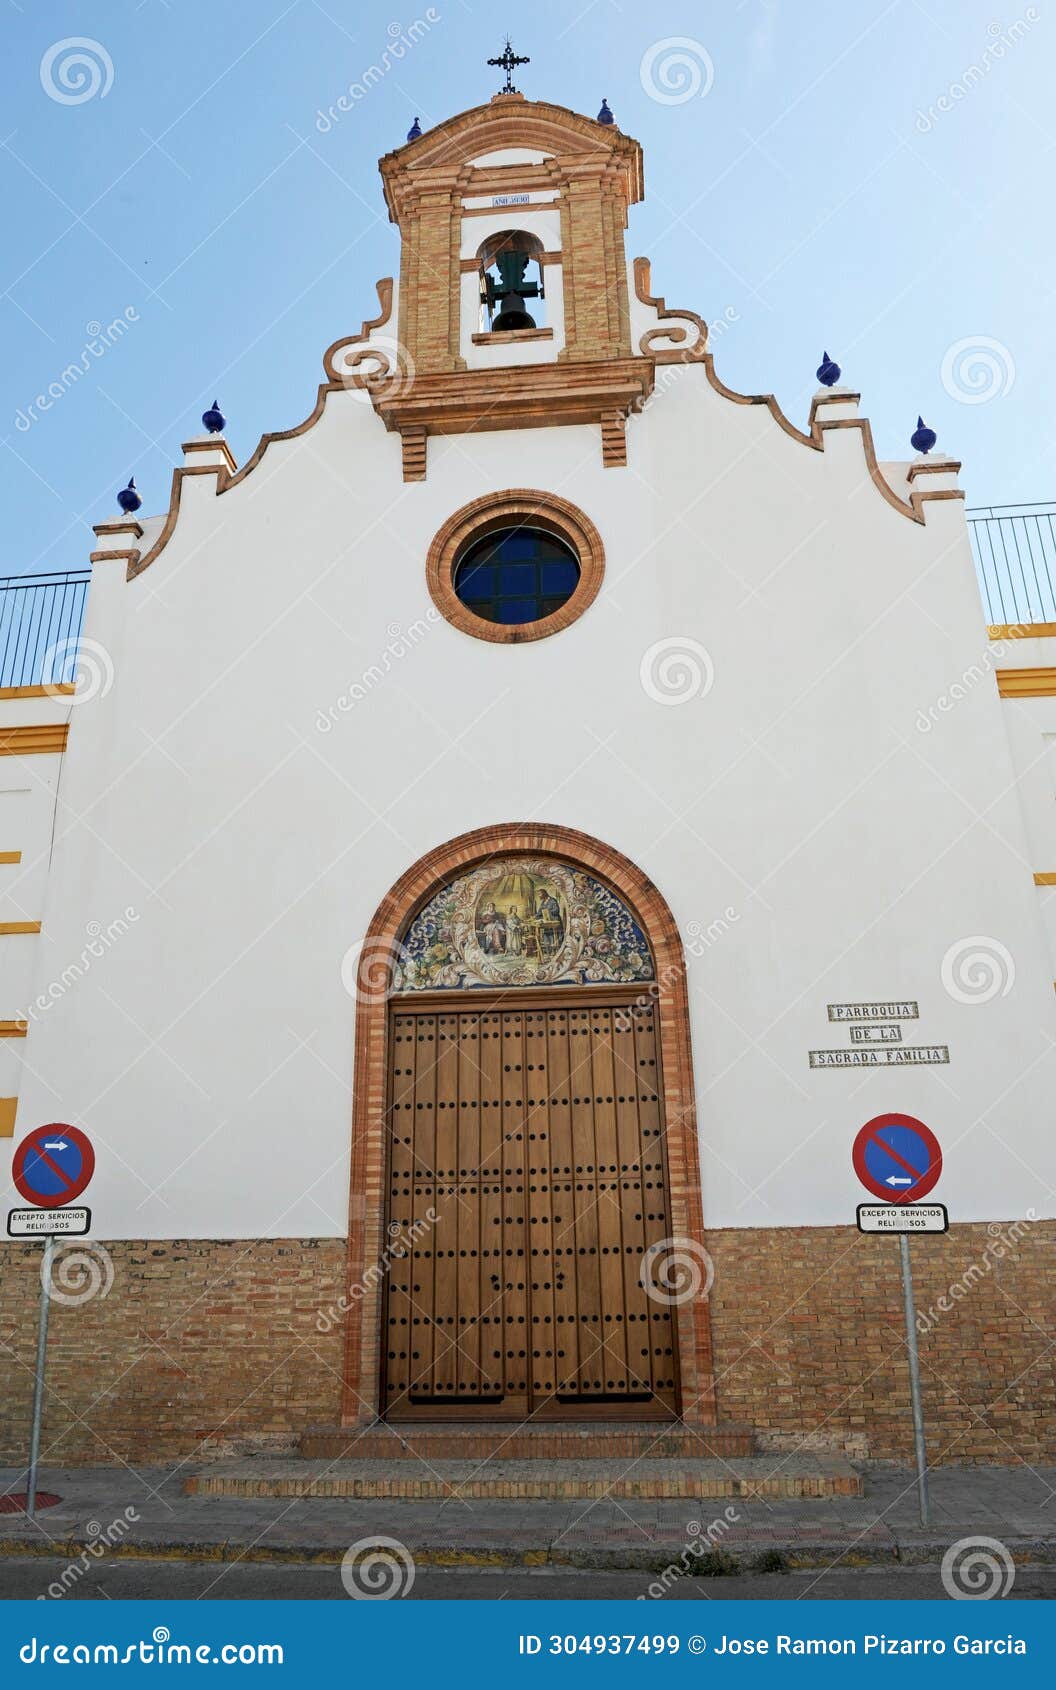 church of the sagrada familia -holy family- in seville, spain